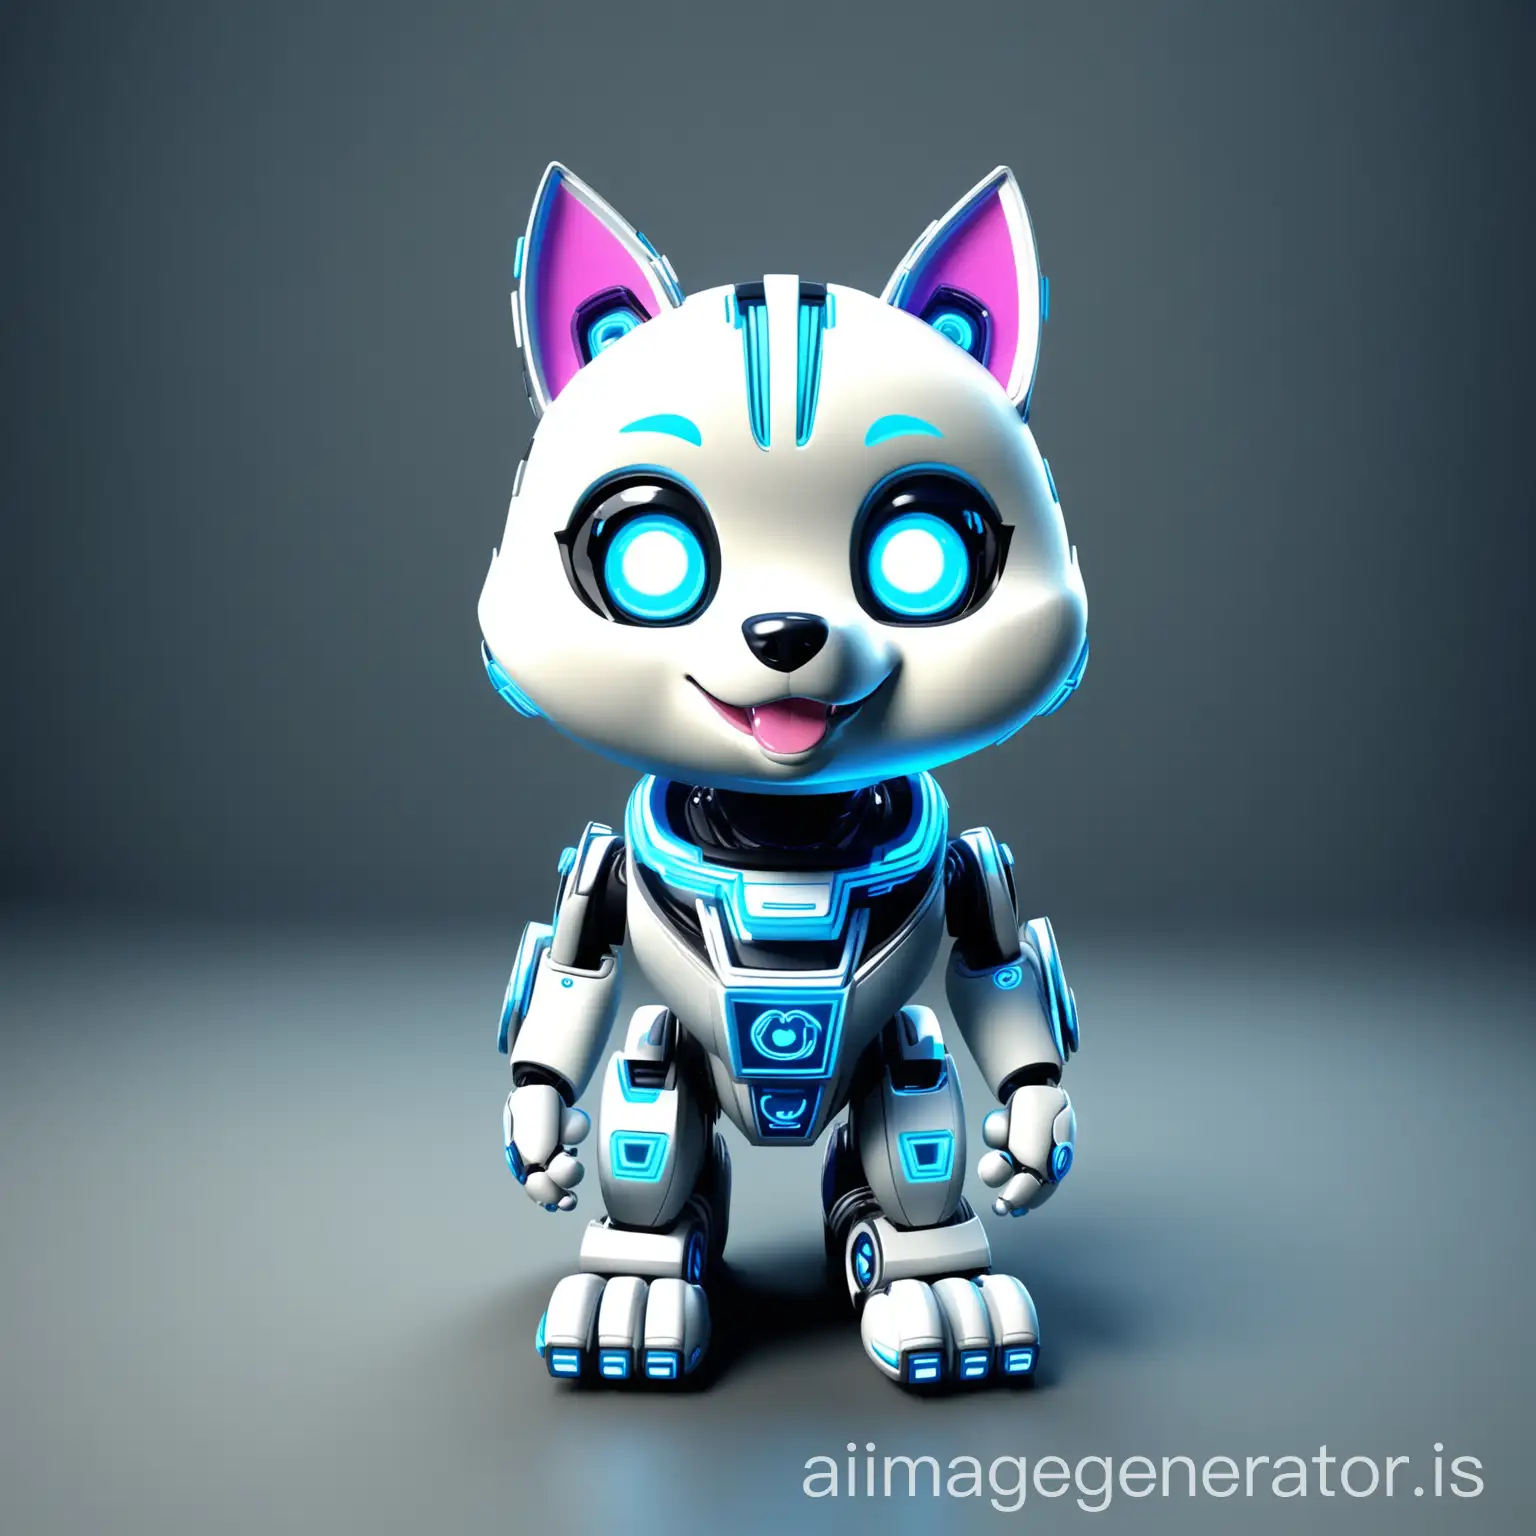 husky cute  puppys
cyber robot happy stylized  3d